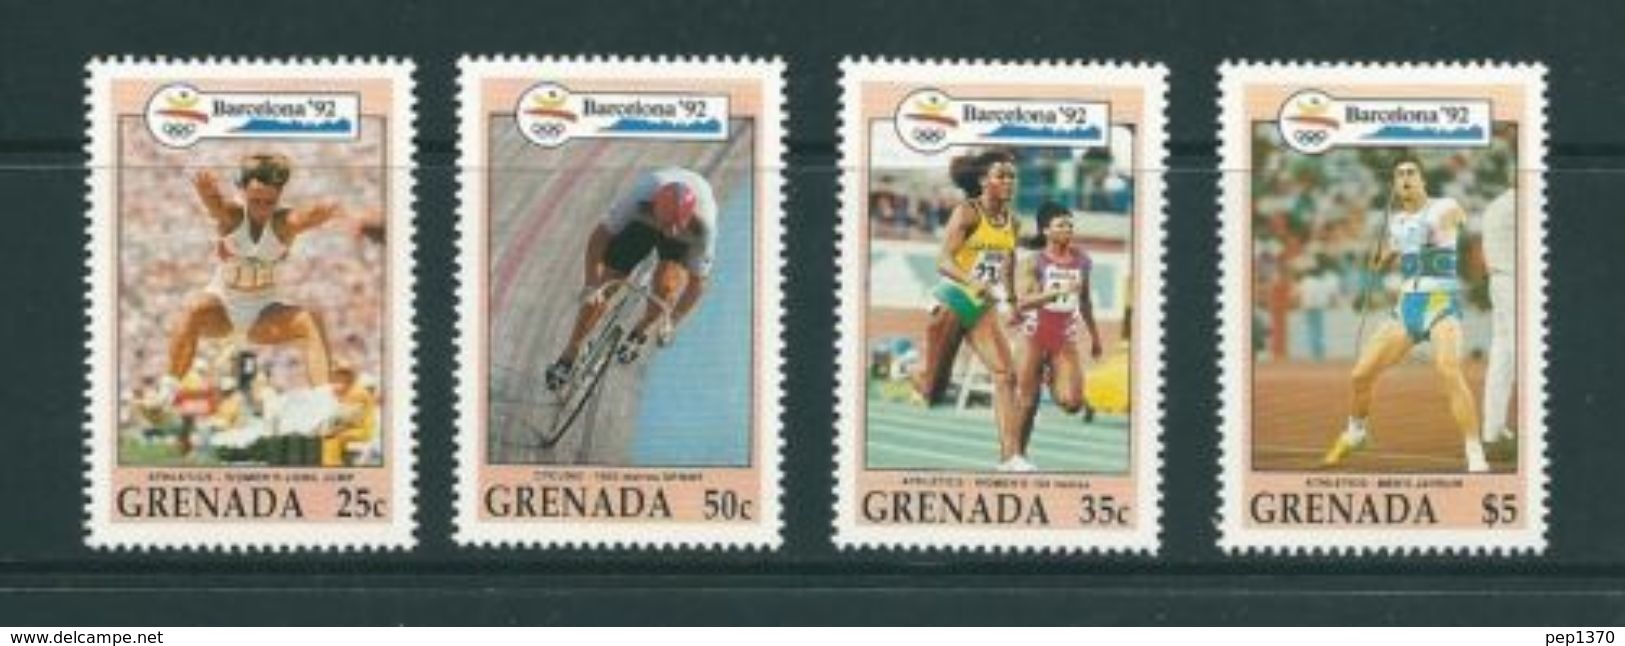 GRENADA 1992 - OLYMPICS BARCELONA 92 - YVERT Nº 2146-2149 - MICHEL ?? - SCOTT 2094-95-96-2100 - Jumping